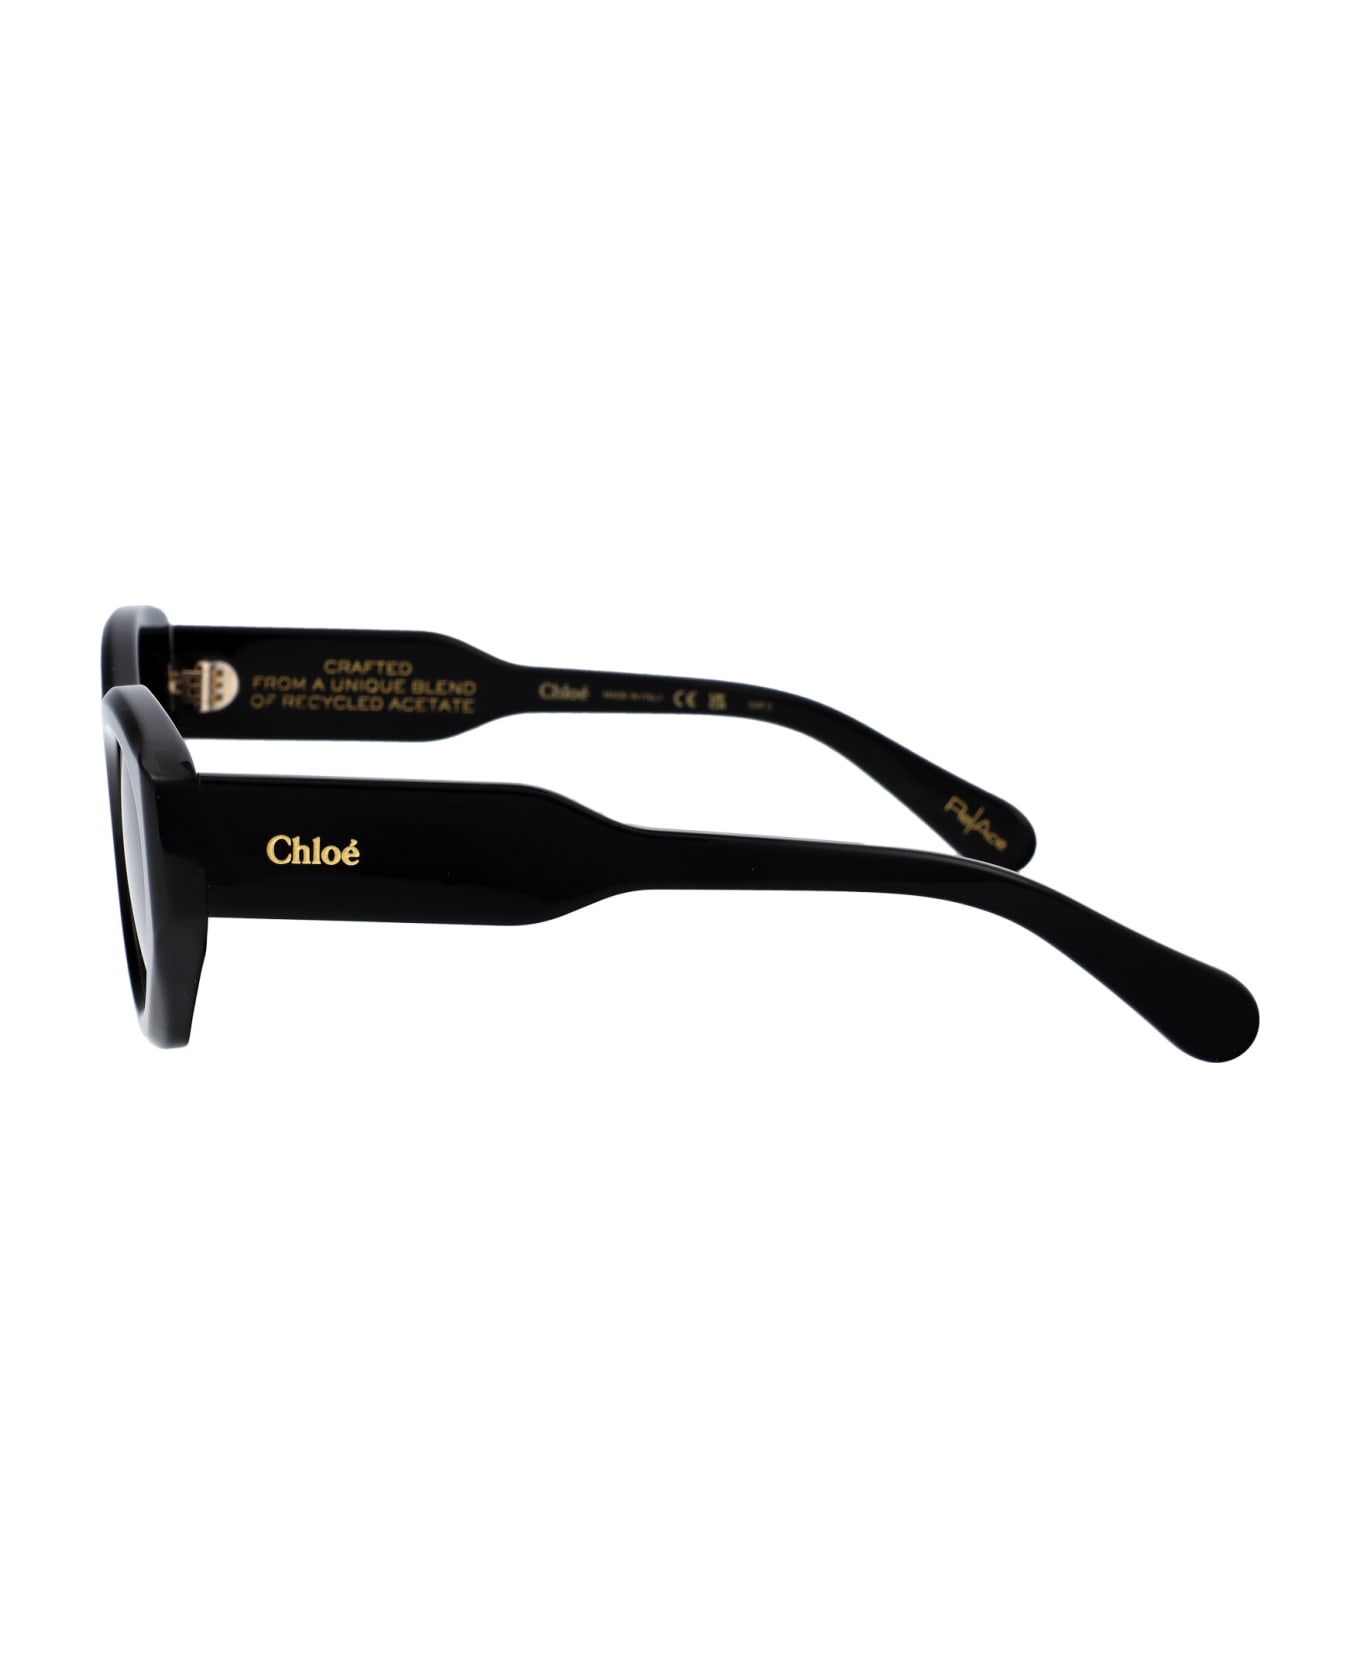 Chloé Eyewear Ch0220s Sunglasses - 001 BLACK BLACK GREY